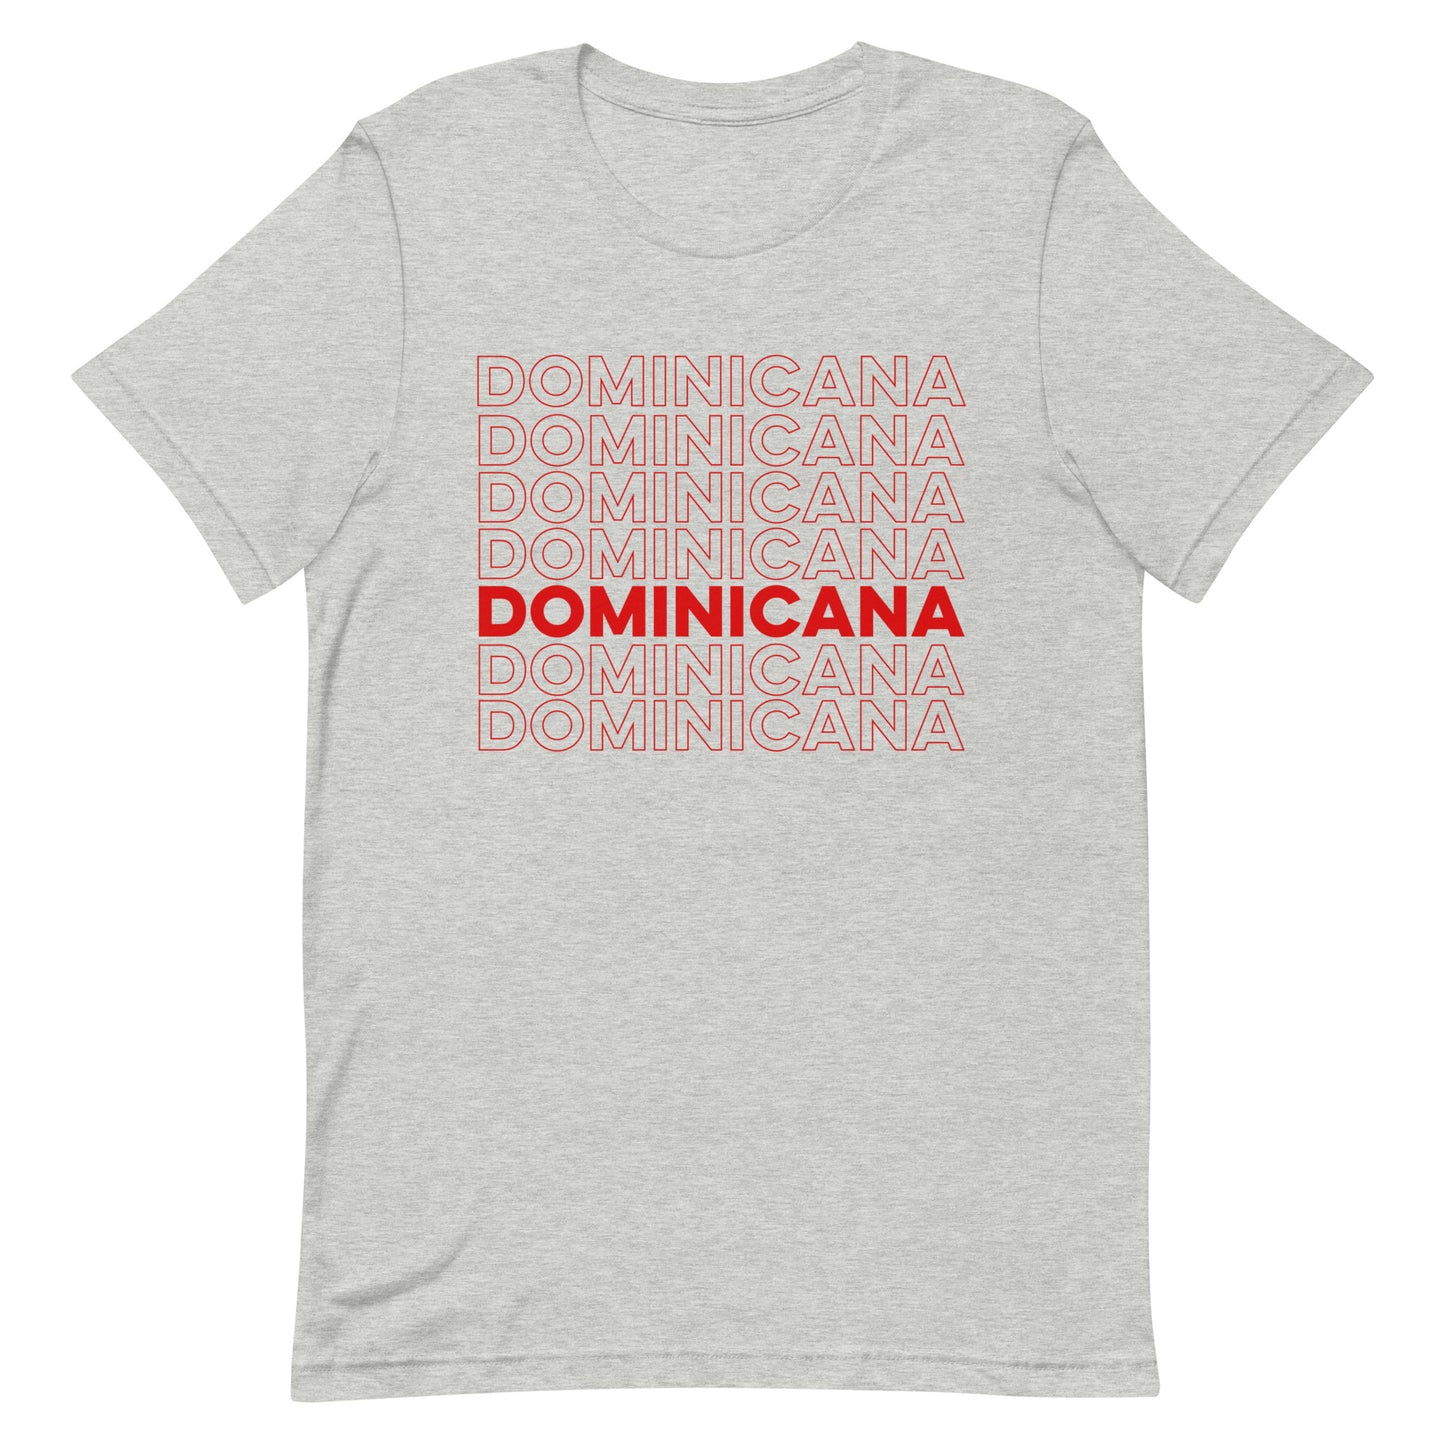 Dominicana Soy T-shirt